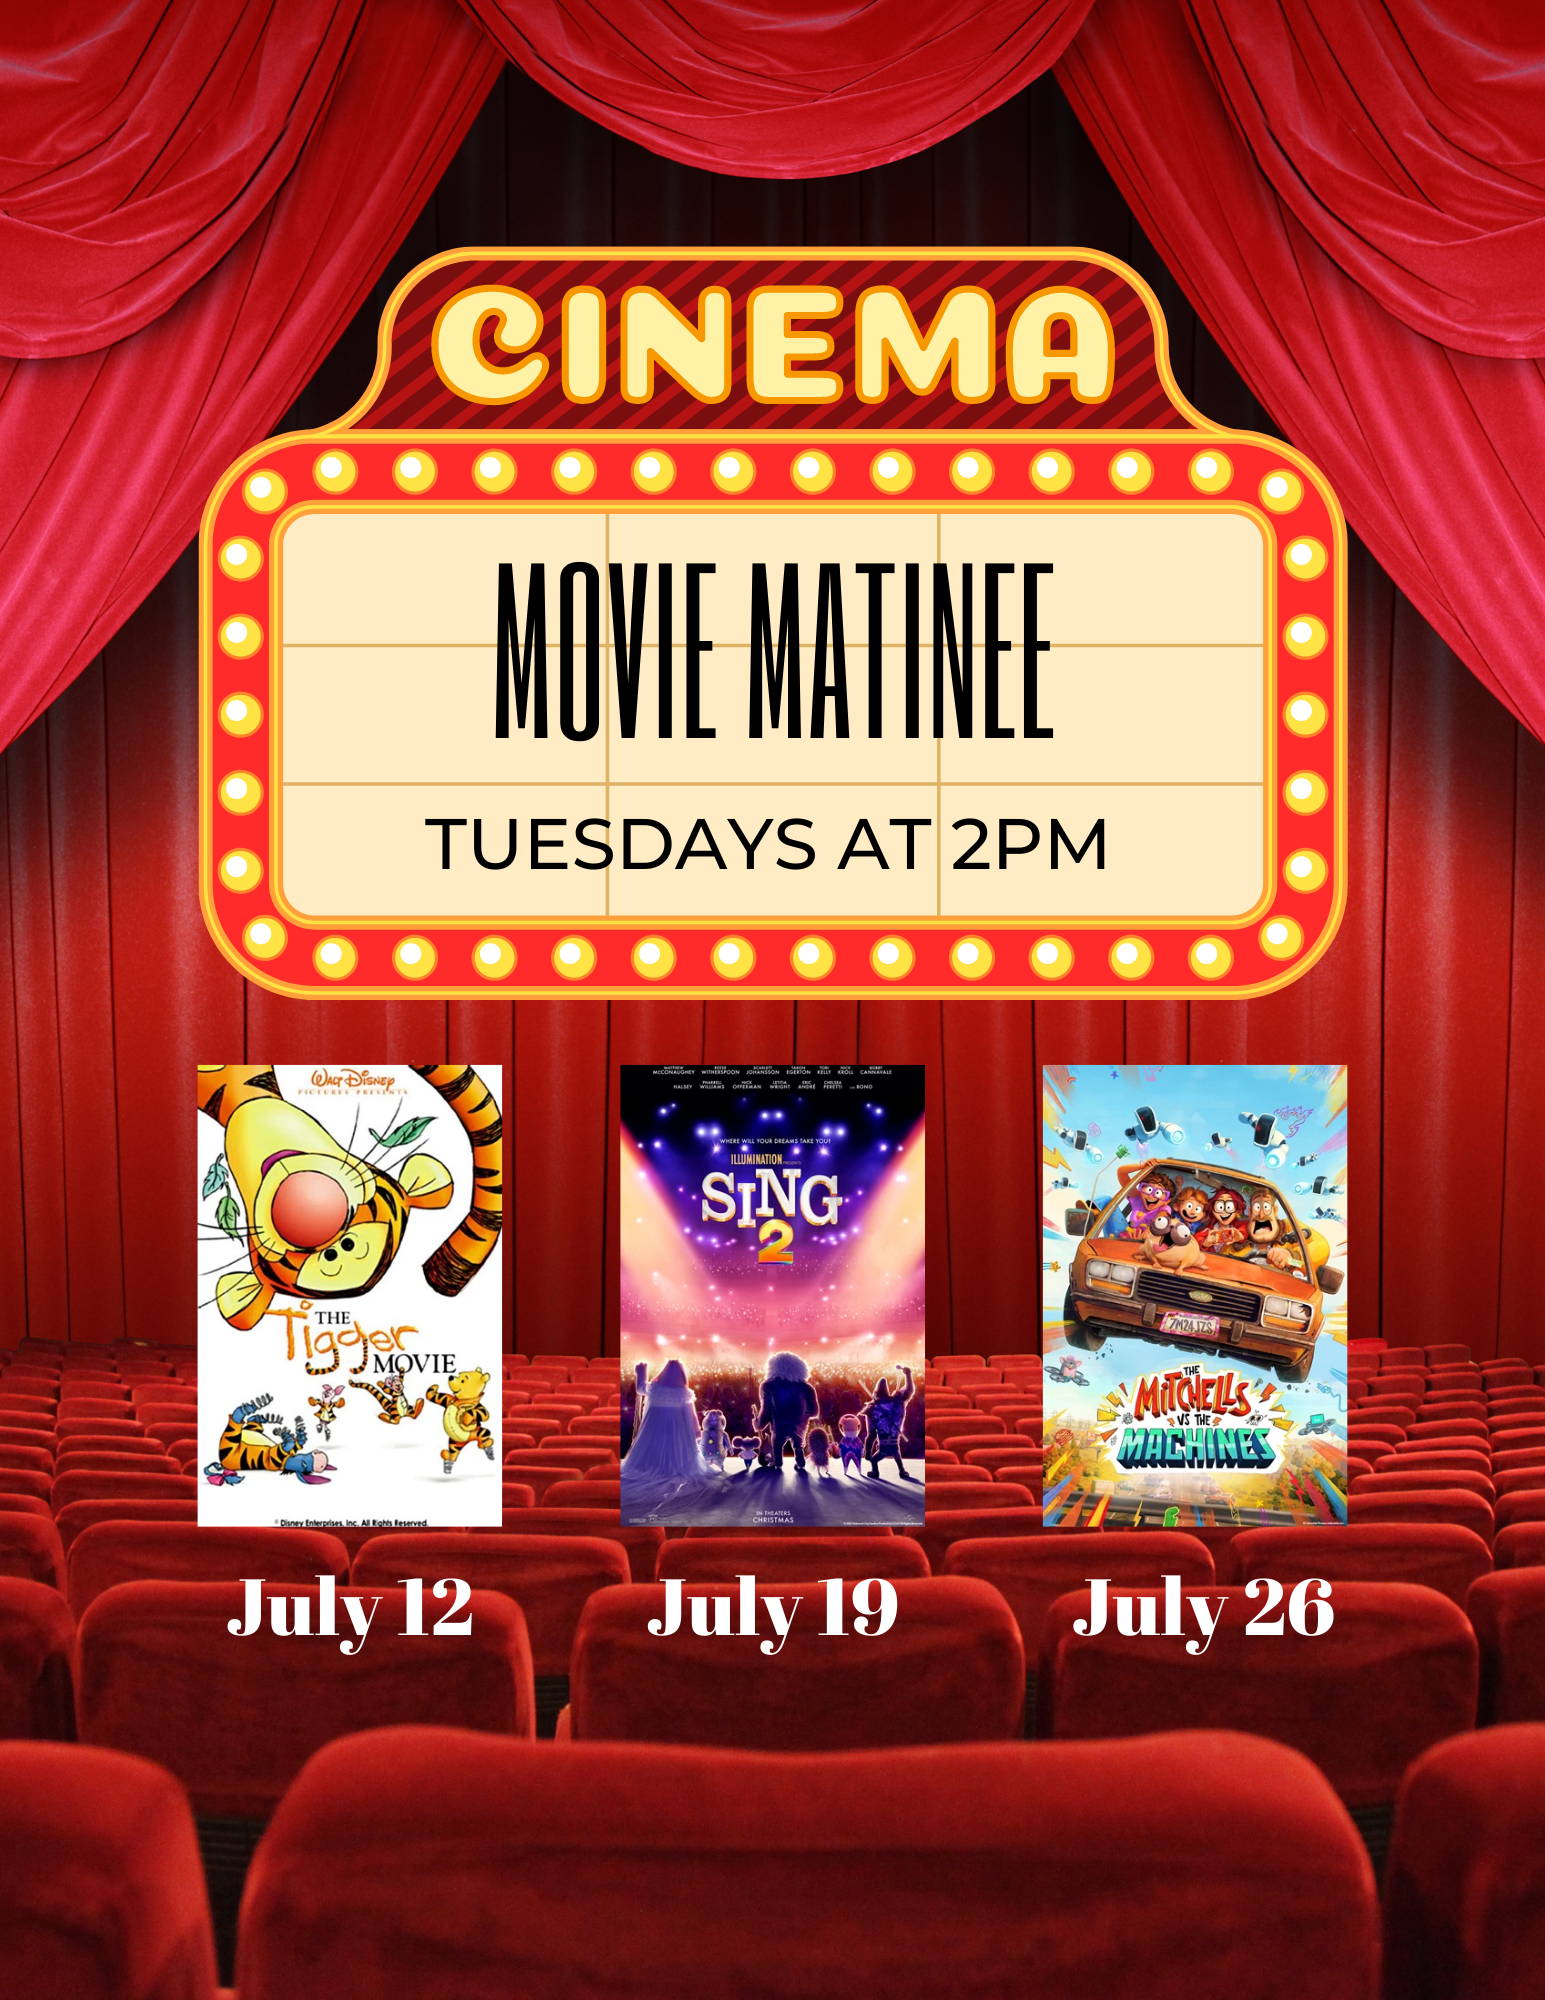 Tuesday movie matinee: Tuesdays 2pm 